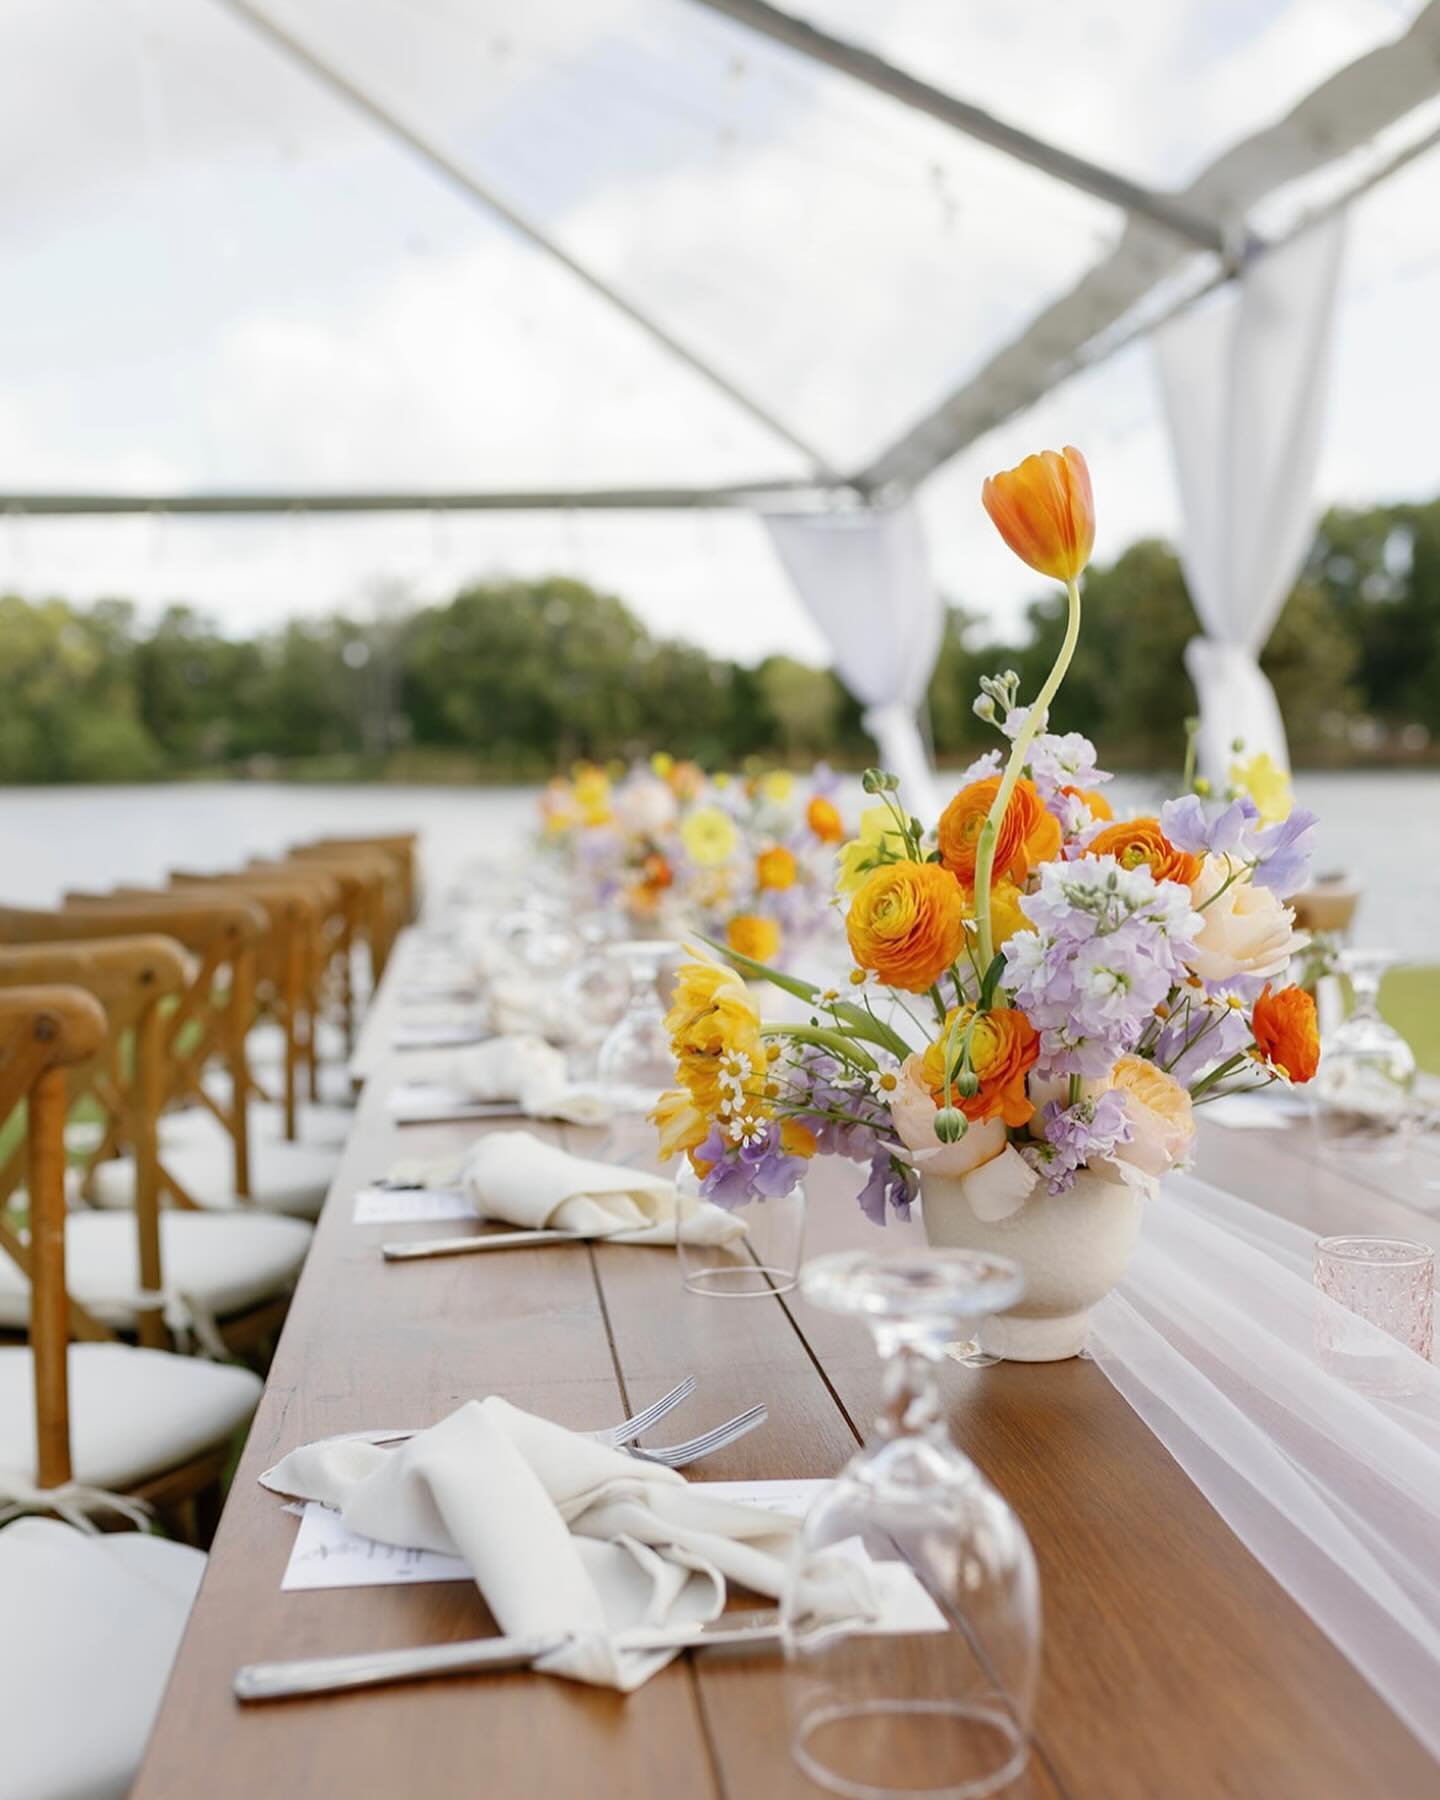 This tablescape is😍

Photographer: @hallemorganwed 

#weddingflorals #weddingtablesetting #gardenwedding #charlestonweddingflorist #miamiflorist #weddingflorist